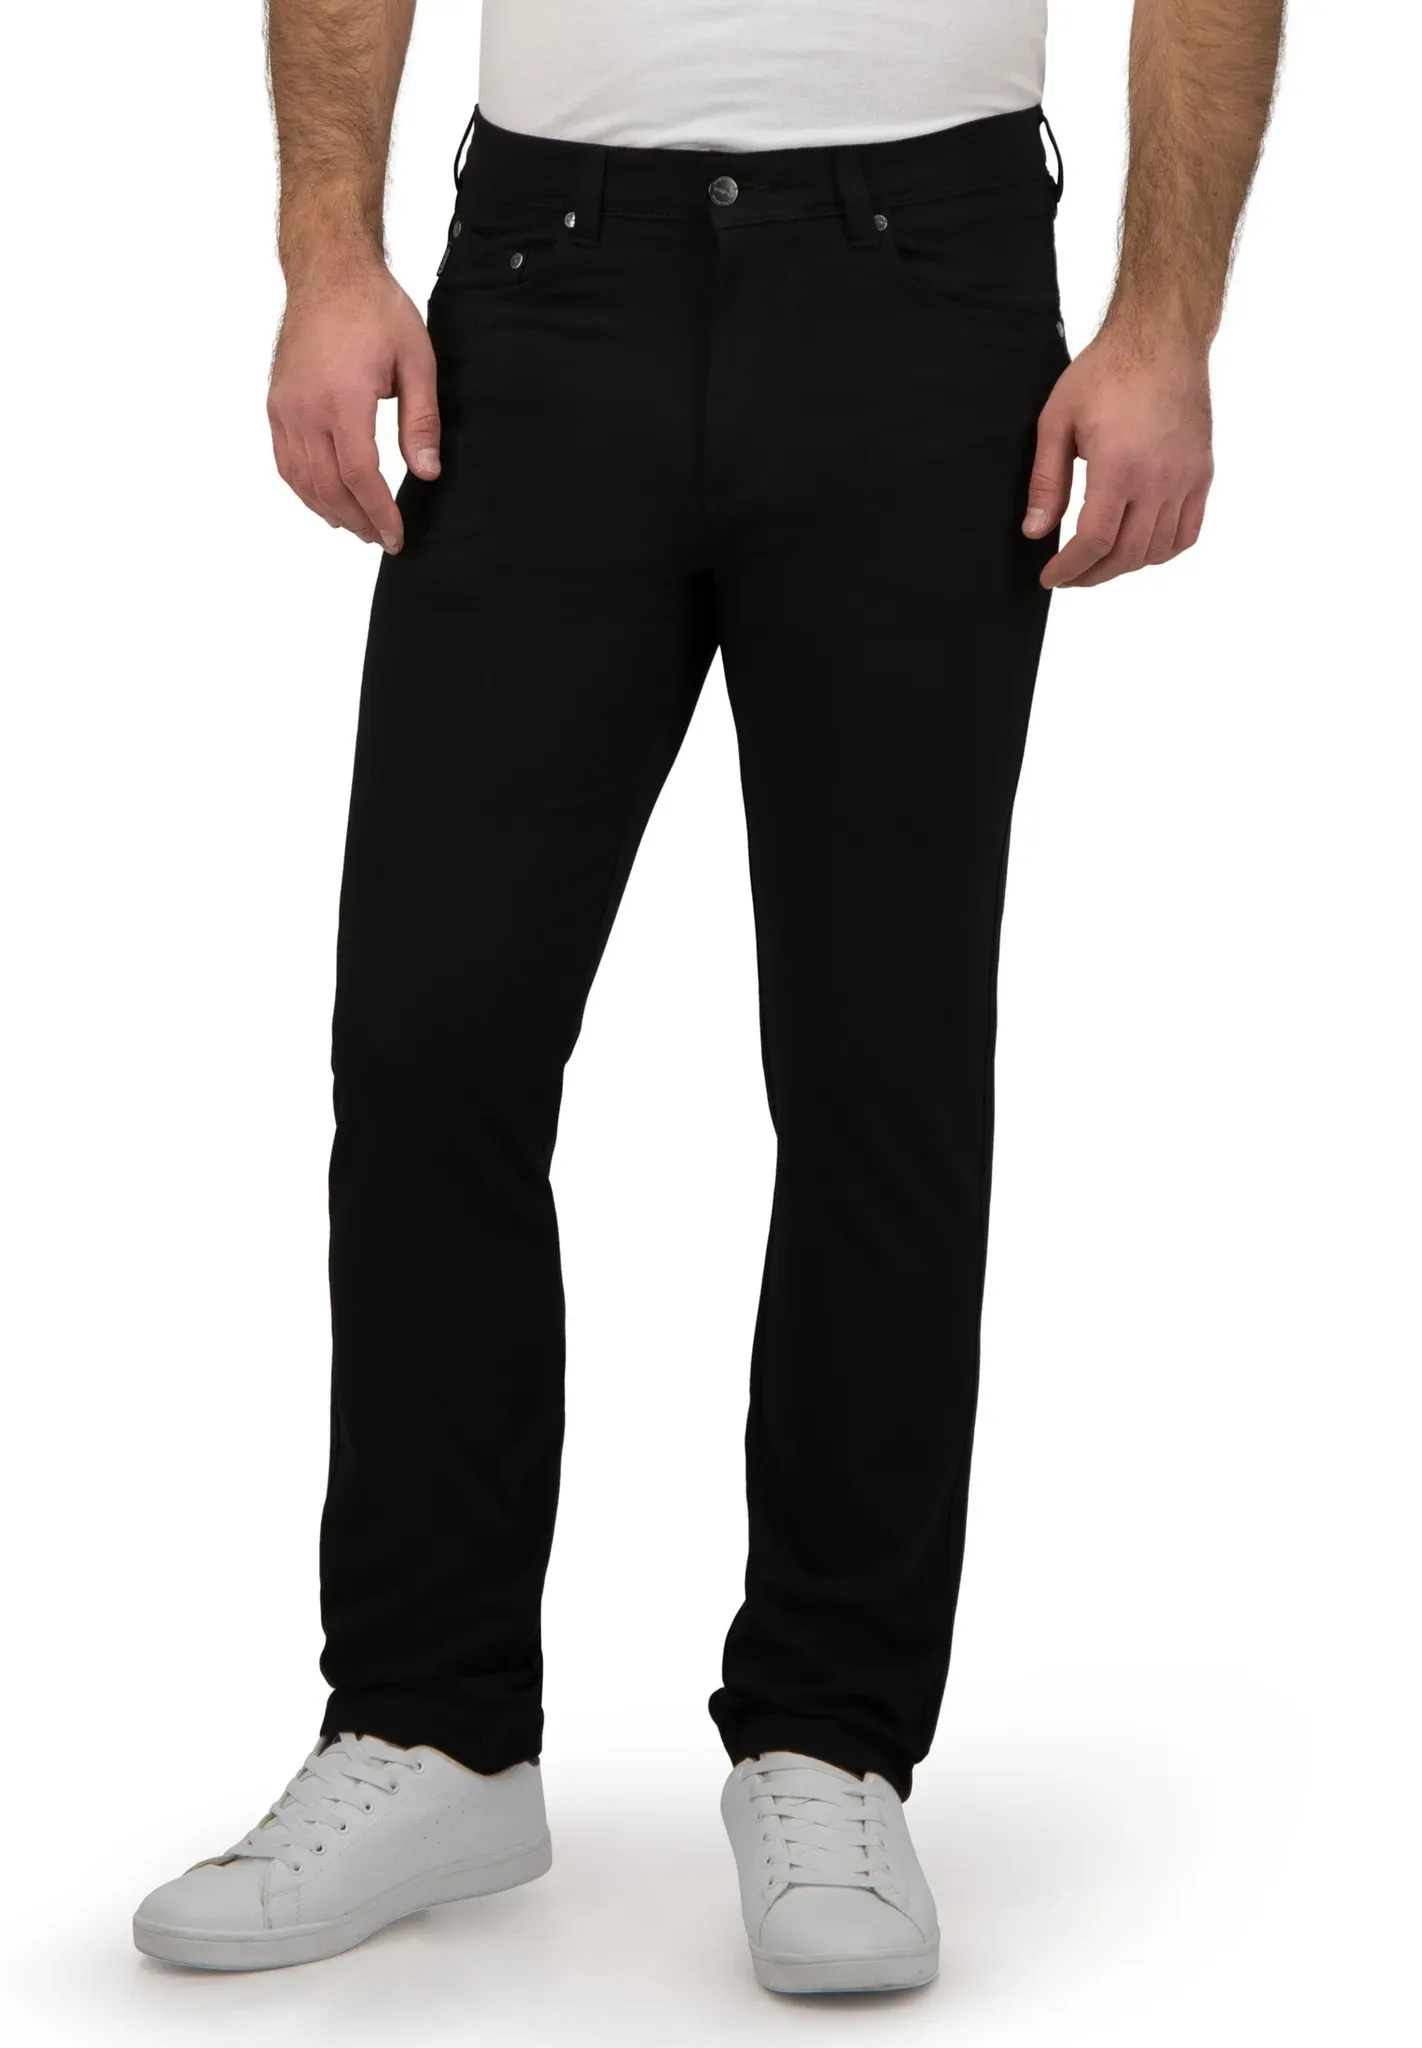 Bequeme Jeans BRÜHL "Genua III 1" Gr. 36, EURO-Größen, schwarz Herren Jeans 5-Pocket-Jeans Straight-fit-Jeans Stretchjeans Stretch